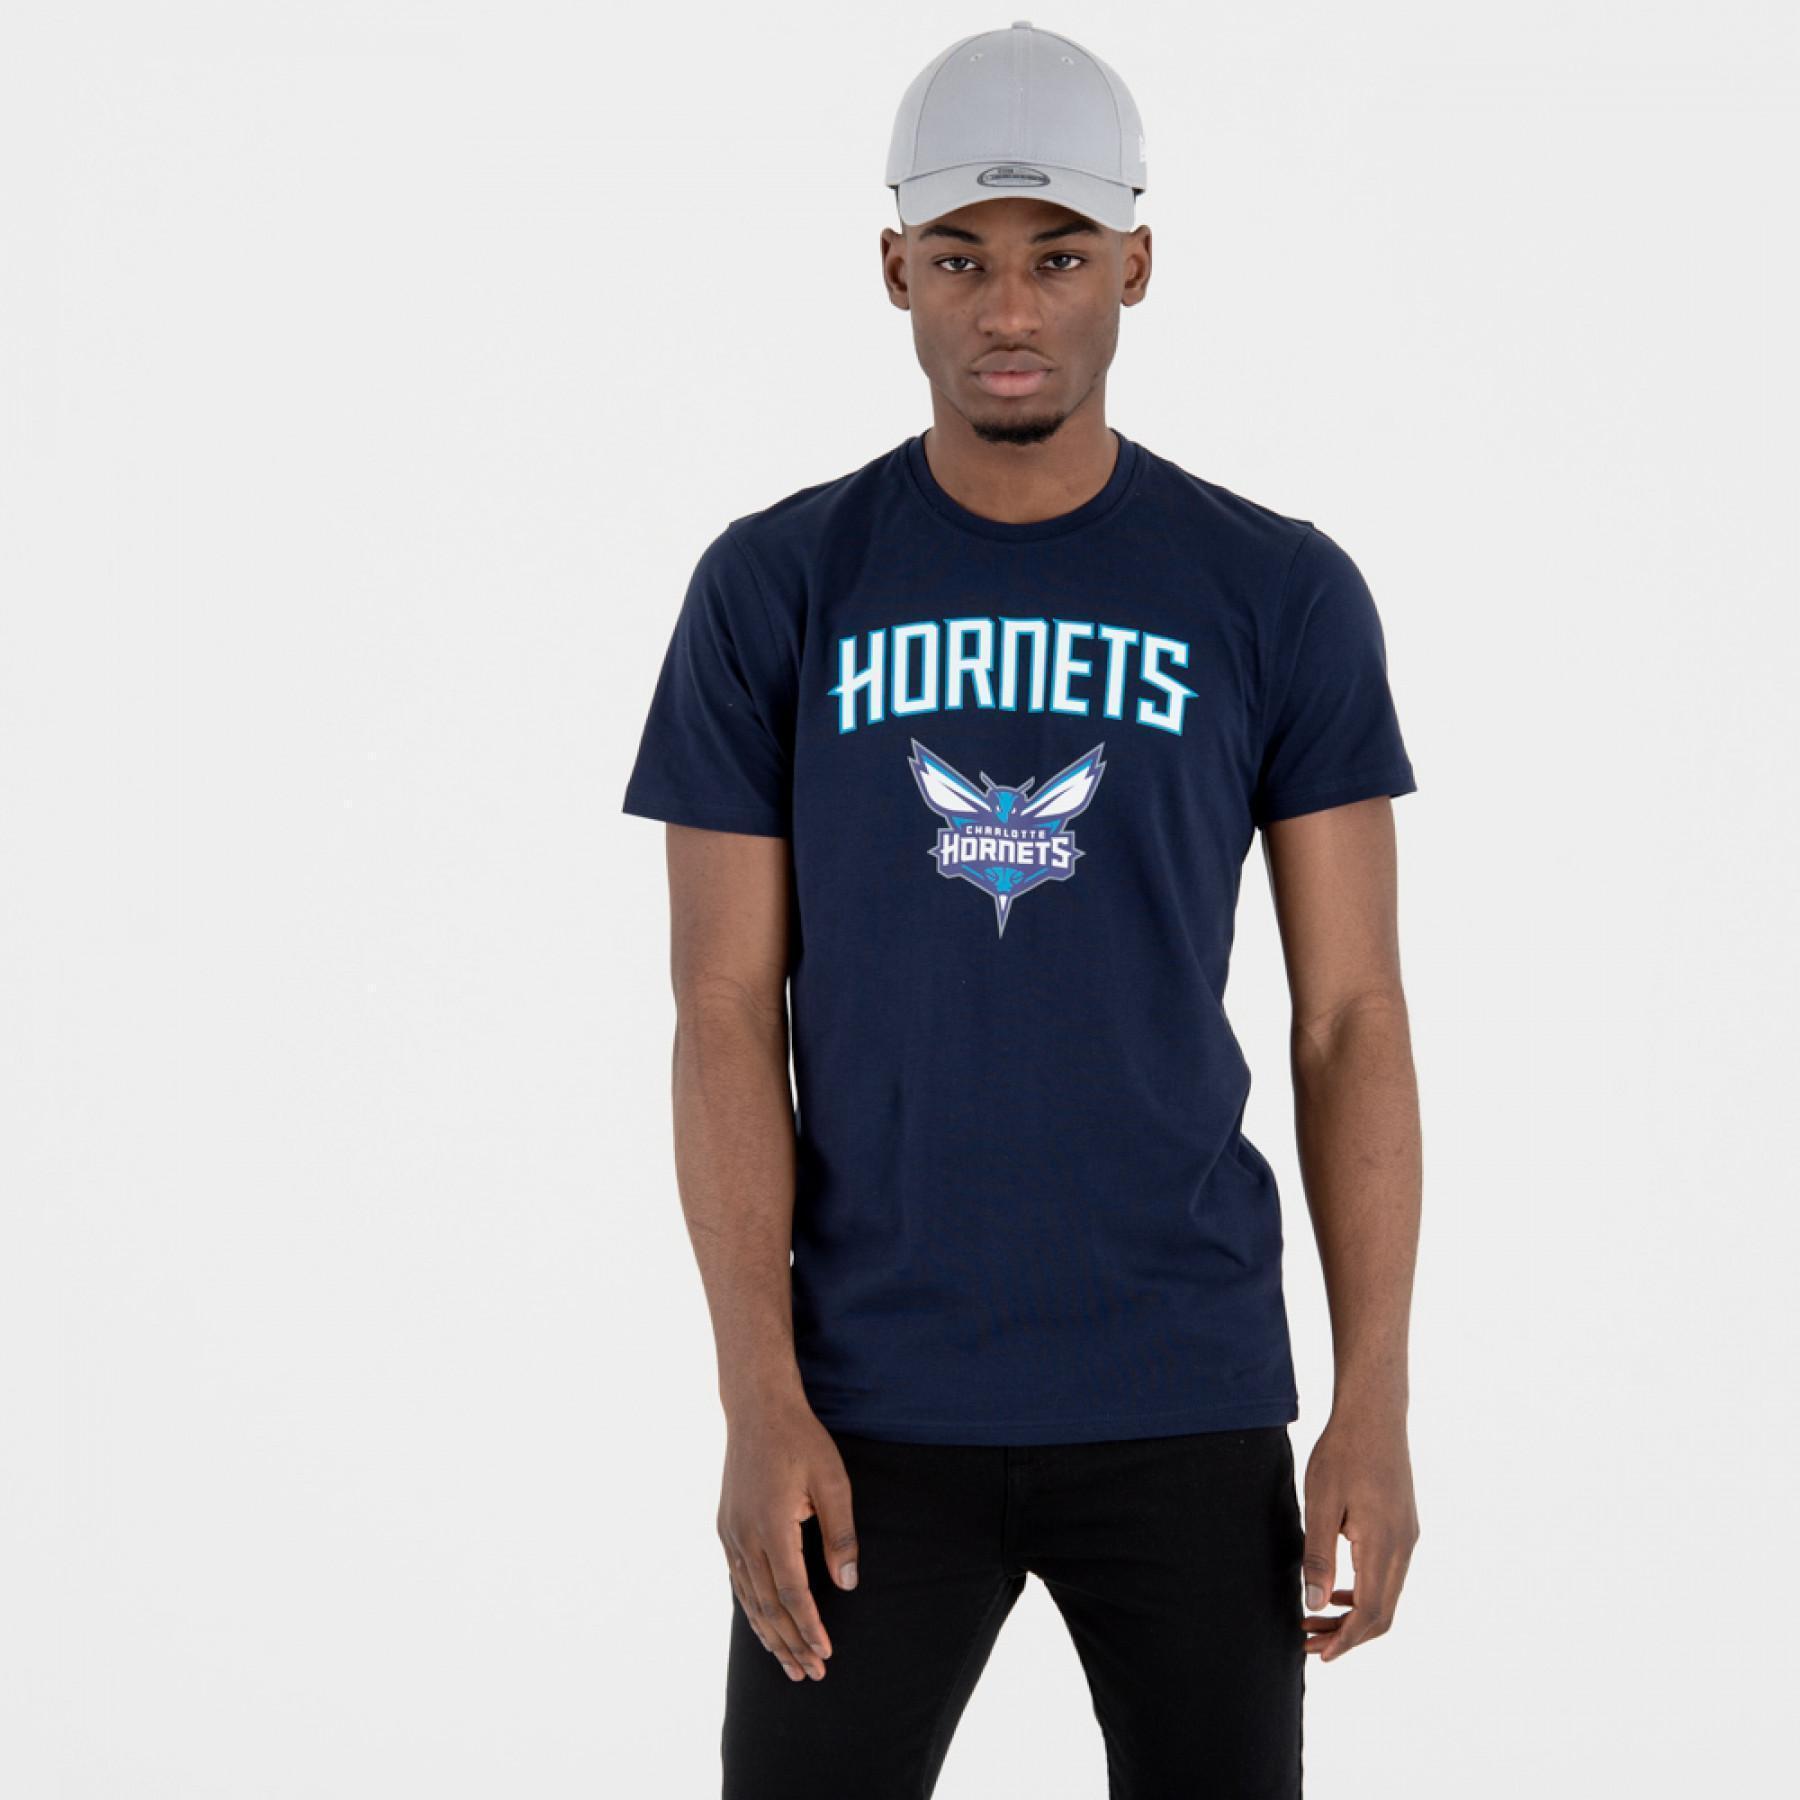 Camiseta New Era logo Charlotte Hornets